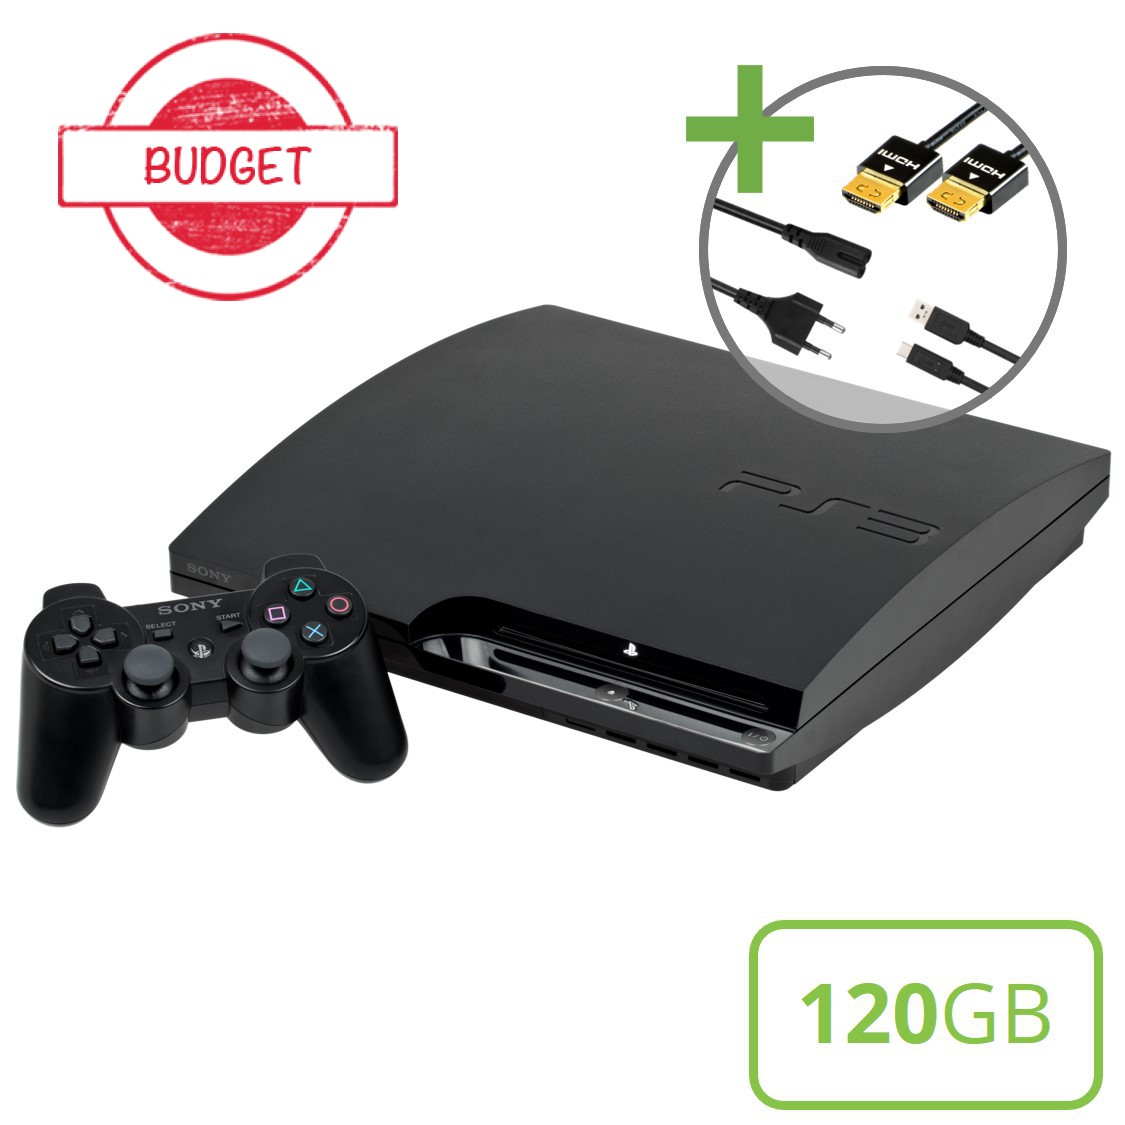 Sony PlayStation 3 Slim (120GB) Starter Pack - DualShock Edition - Budget - Playstation 3 Hardware